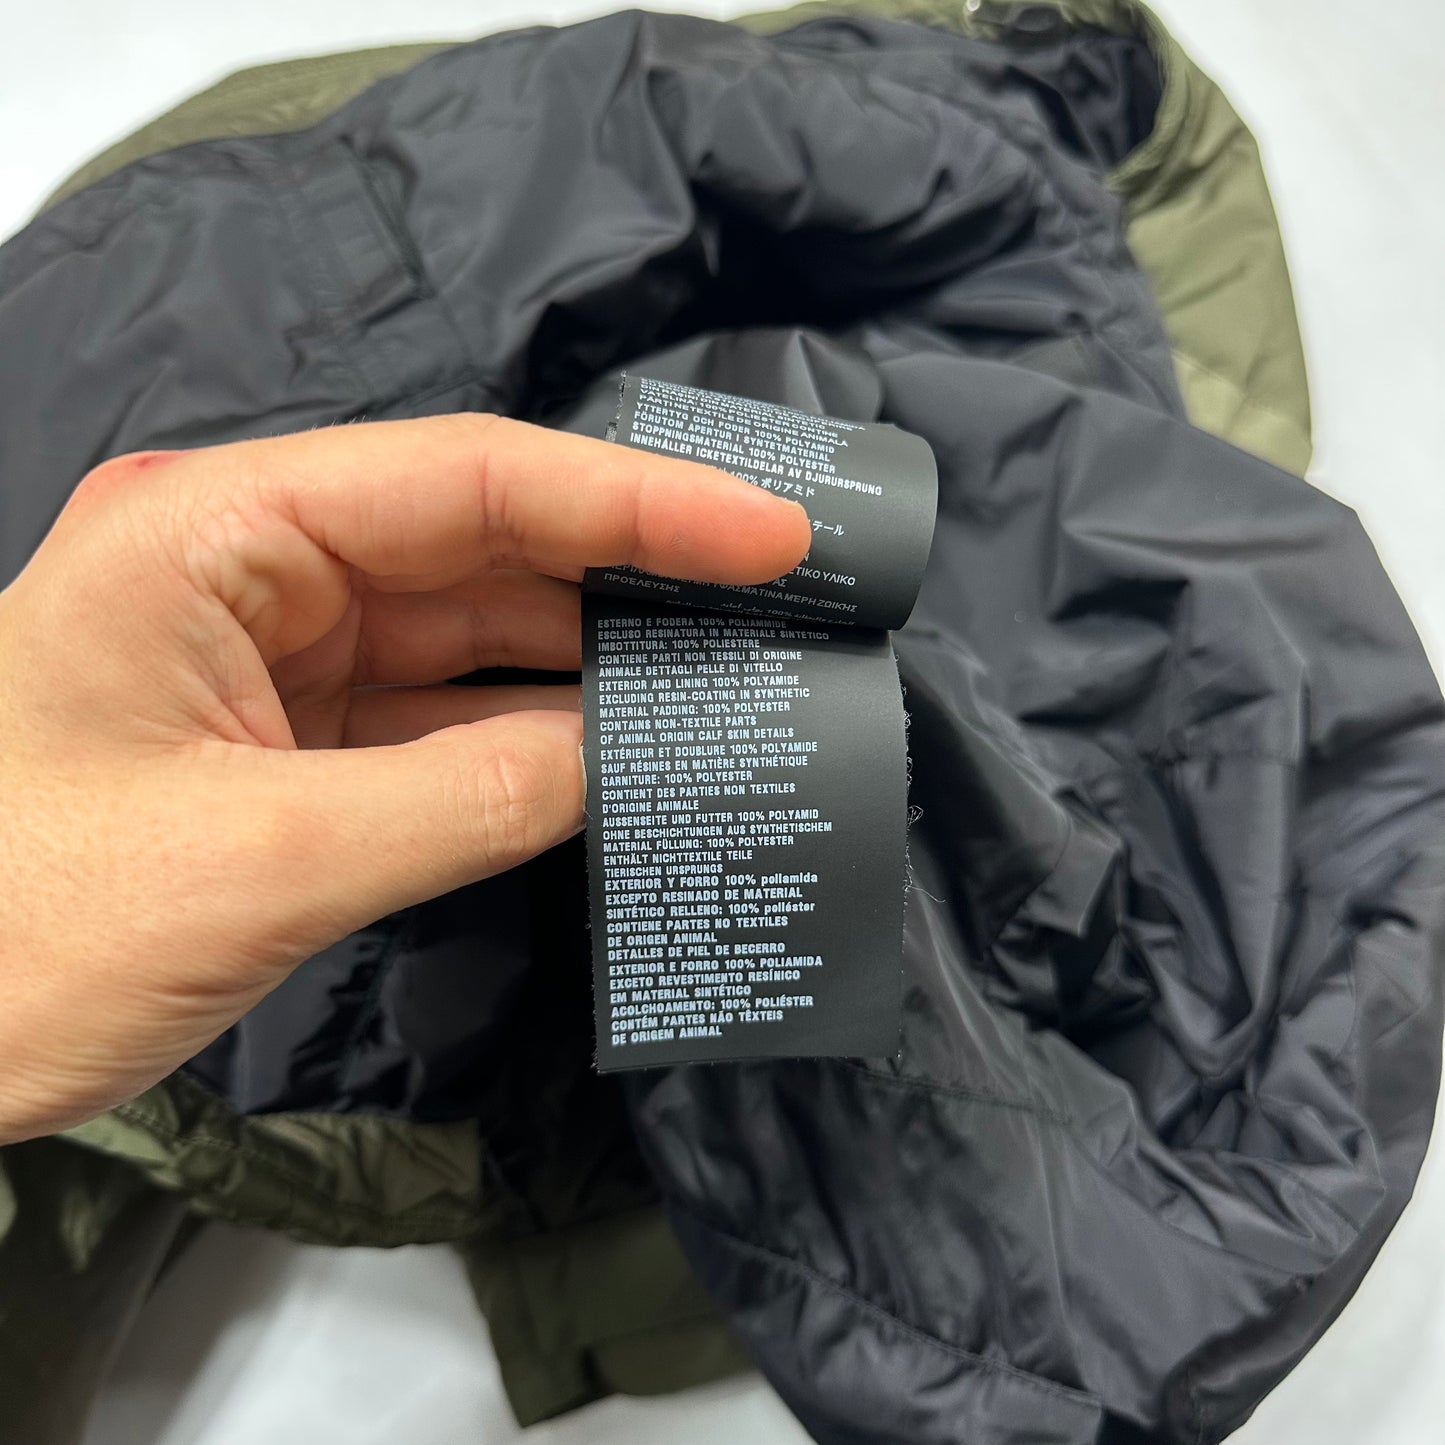 Prada Milano 2018 Laminated Nylon Padded Jacket - M/L